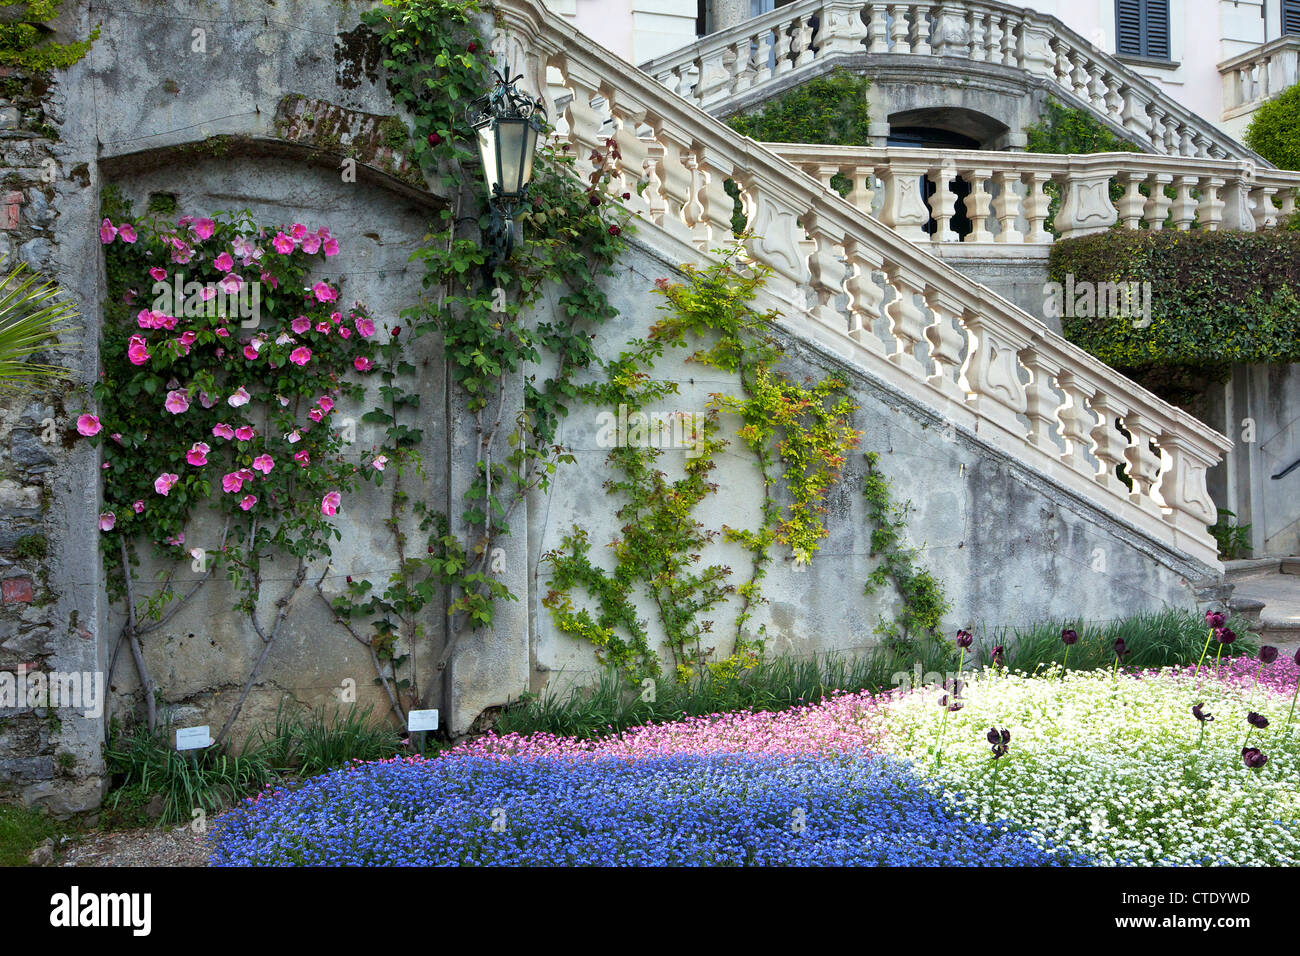 Villa Carlotta and gardens in spring sunshine, Tremezzo, Lake Como, Northern Italy, Europe Stock Photo